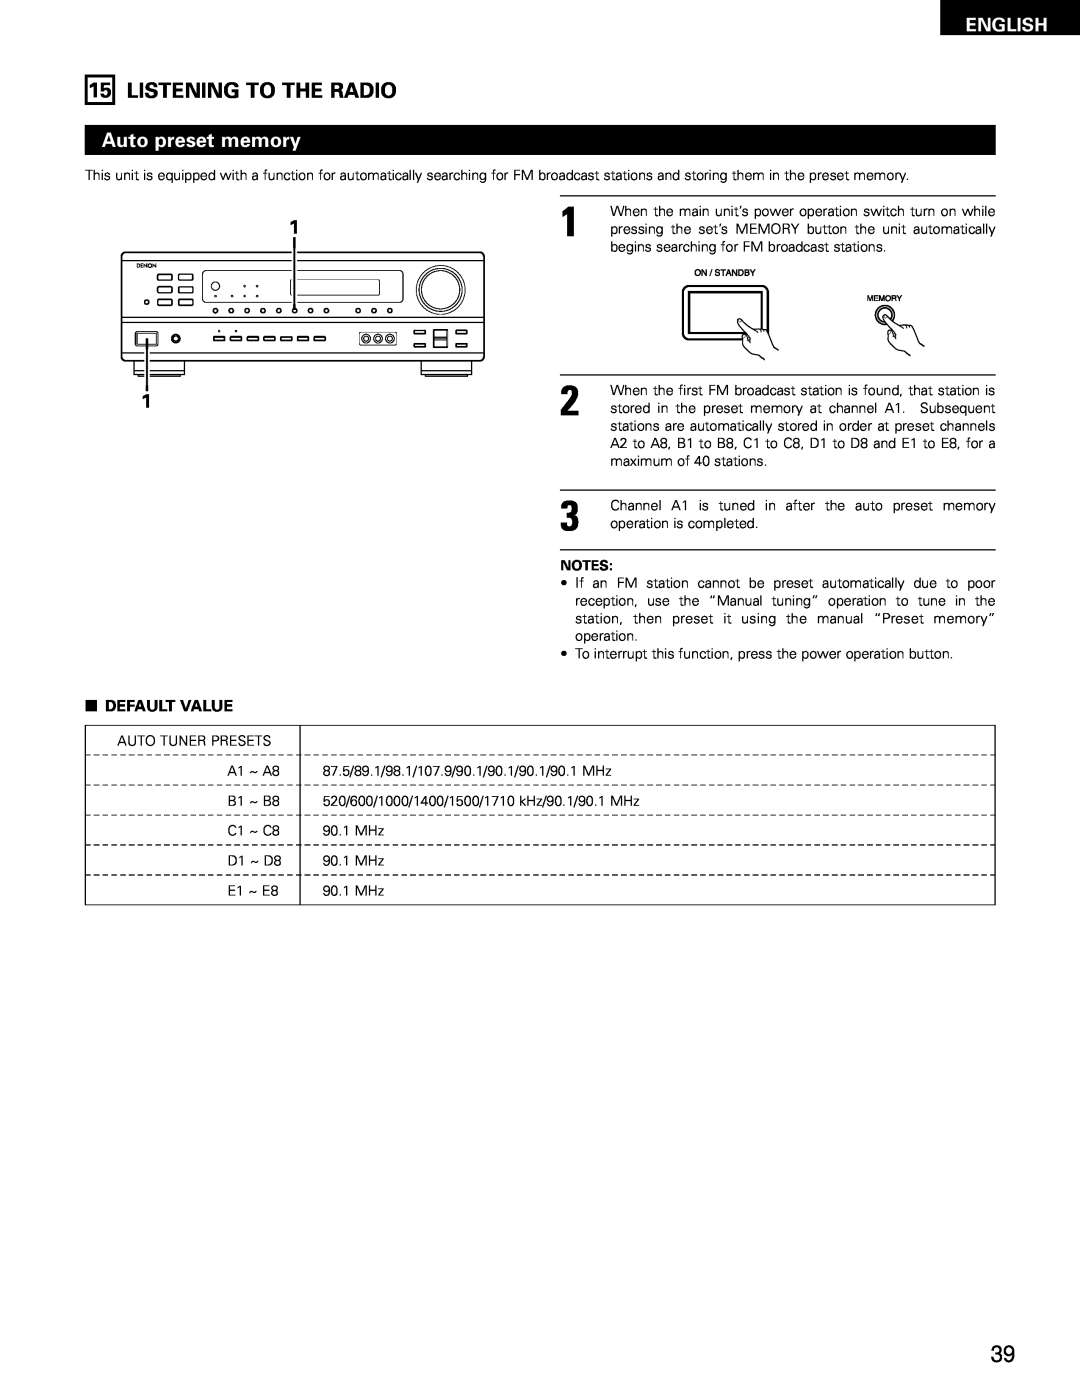 Denon AVR-1403, 483 manual Listening To The Radio, Auto preset memory, 2DEFAULT VALUE, English 